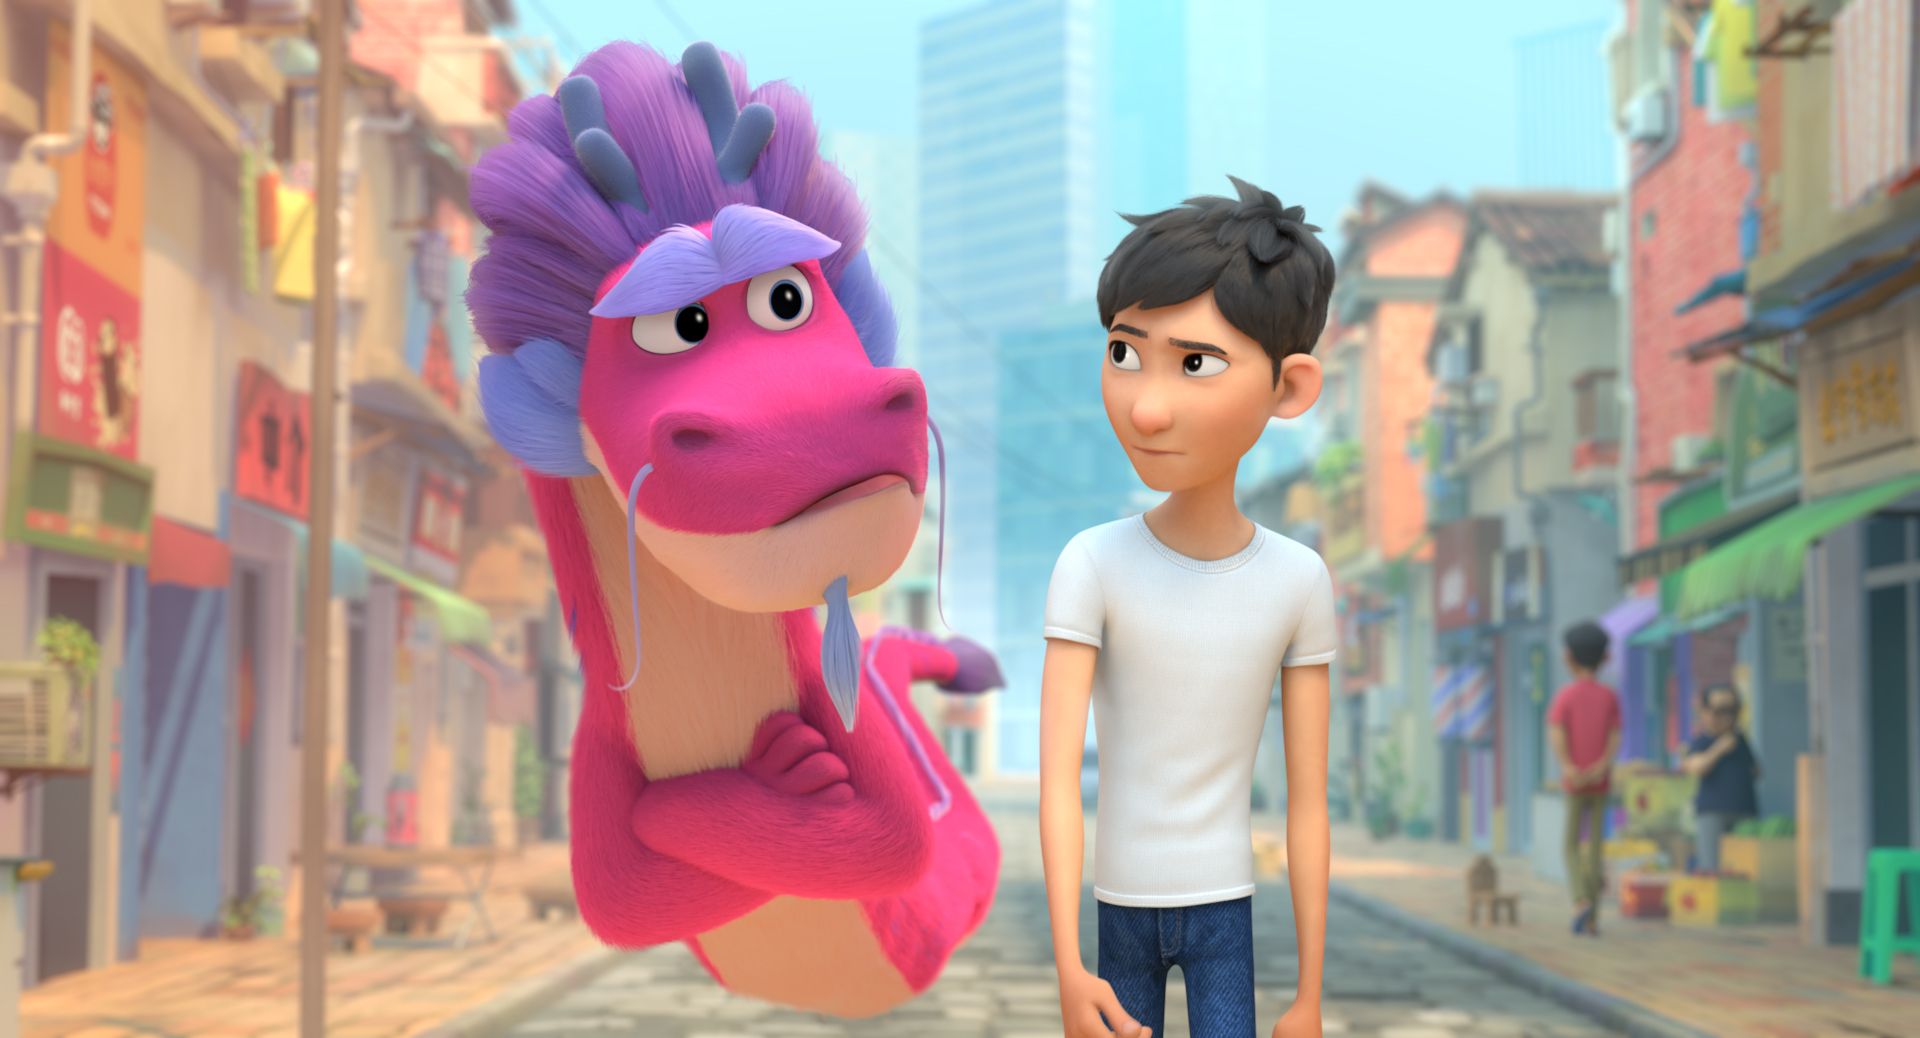 Wish Dragon': 'Aladdin' Returns to China With a Pink, Fluffy Genie